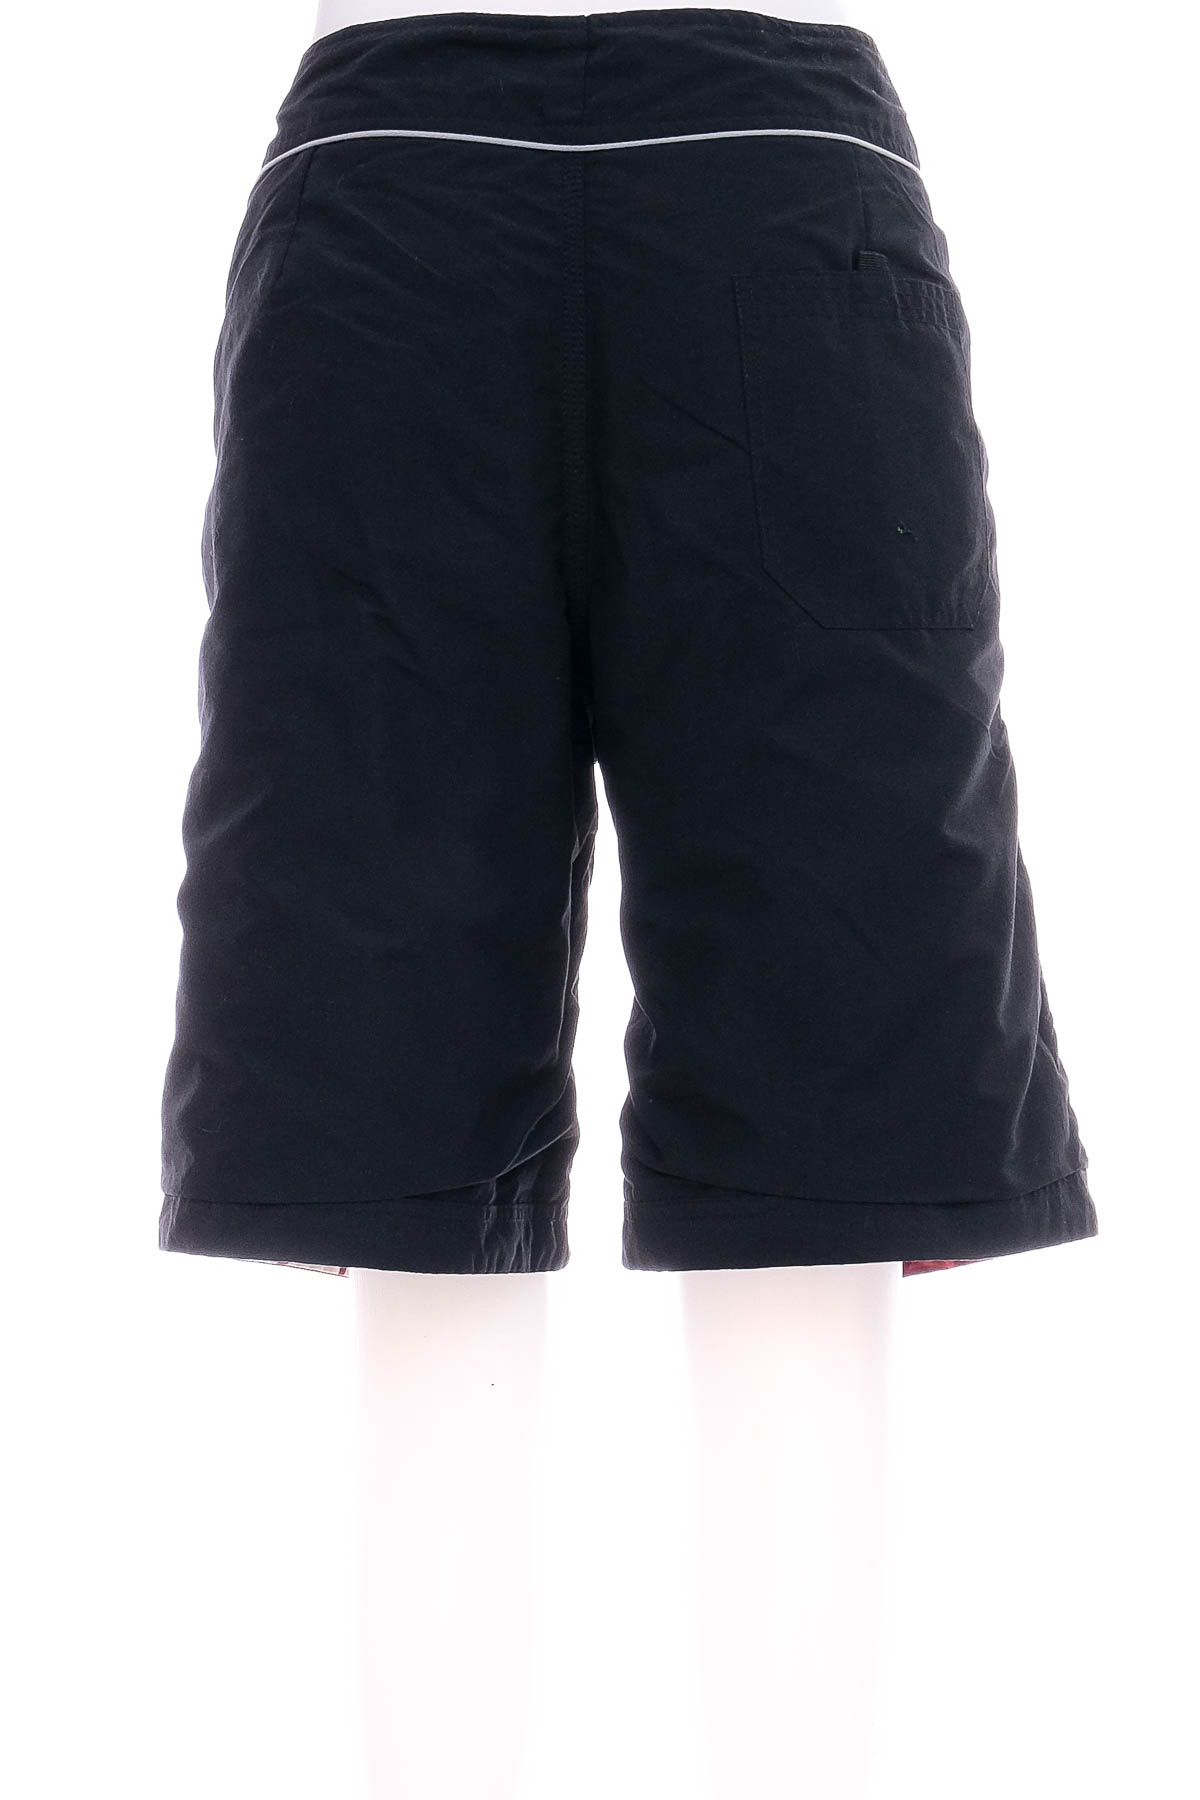 Men's shorts reversible - CHAI AREE - 3